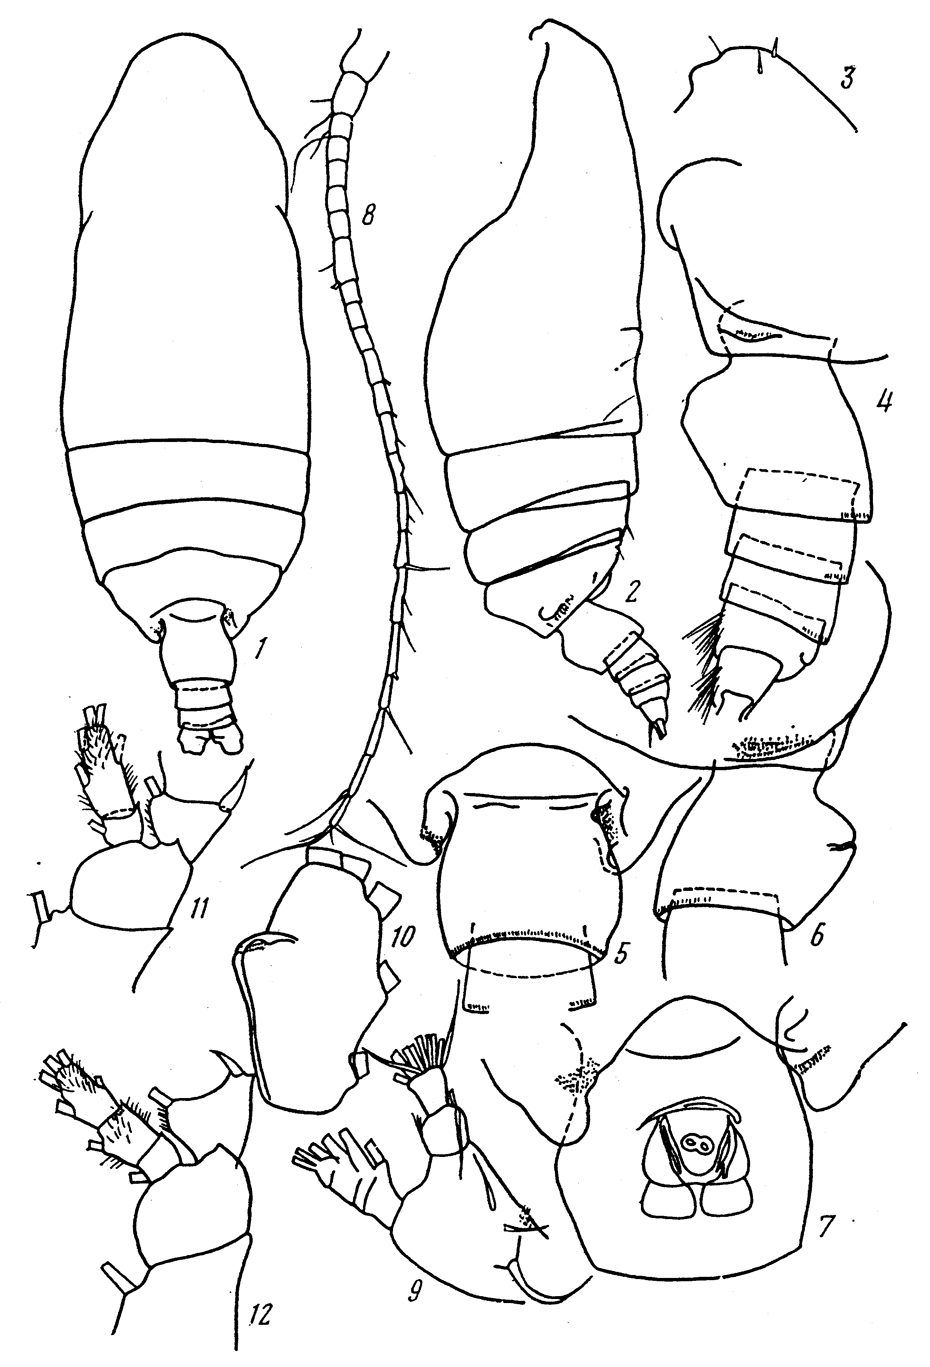 Species Batheuchaeta antarctica - Plate 2 of morphological figures